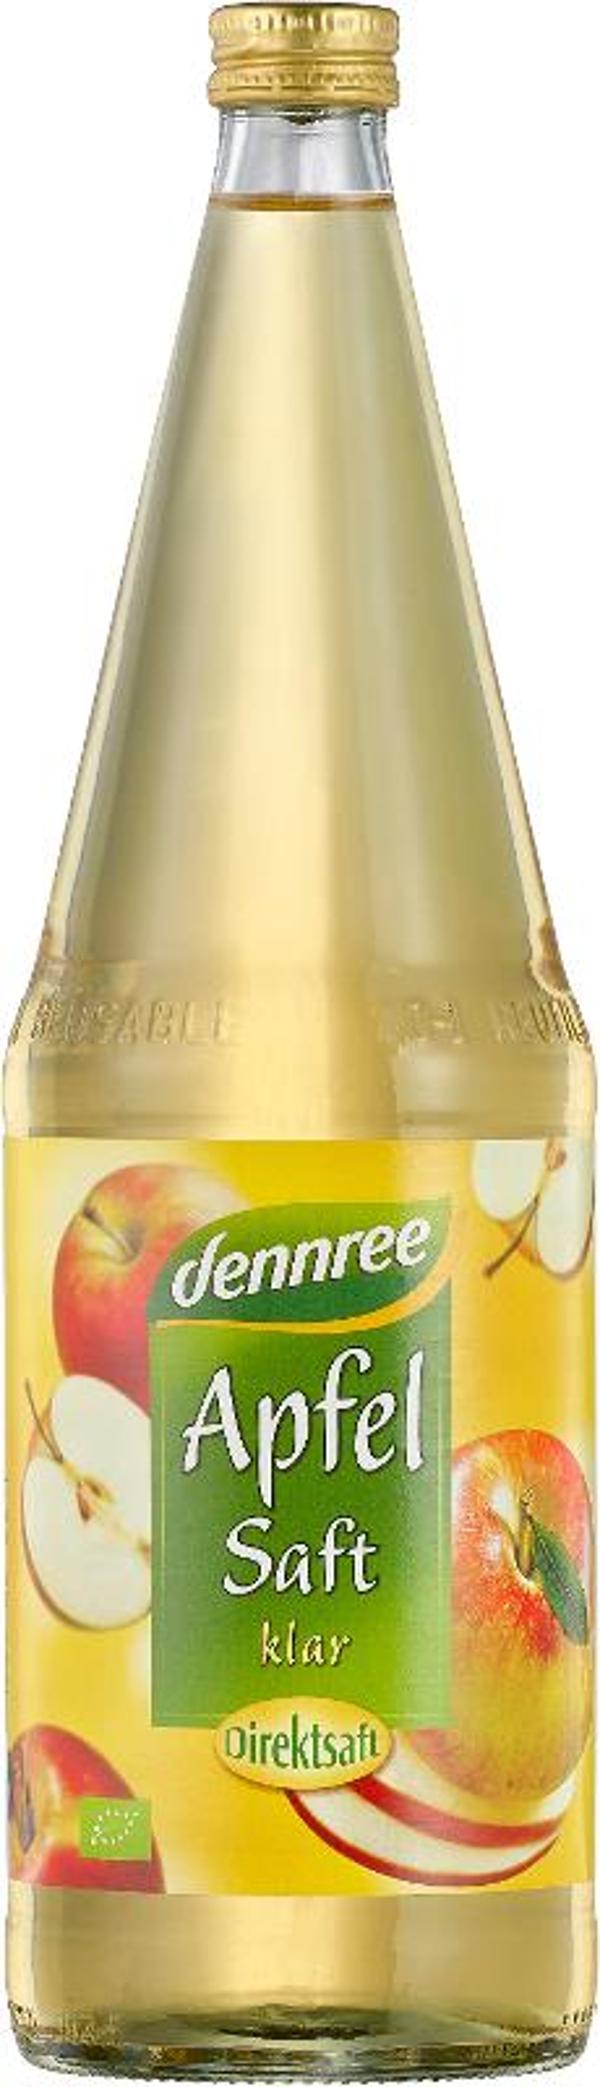 Produktfoto zu Apfelsaft 1 l dennree